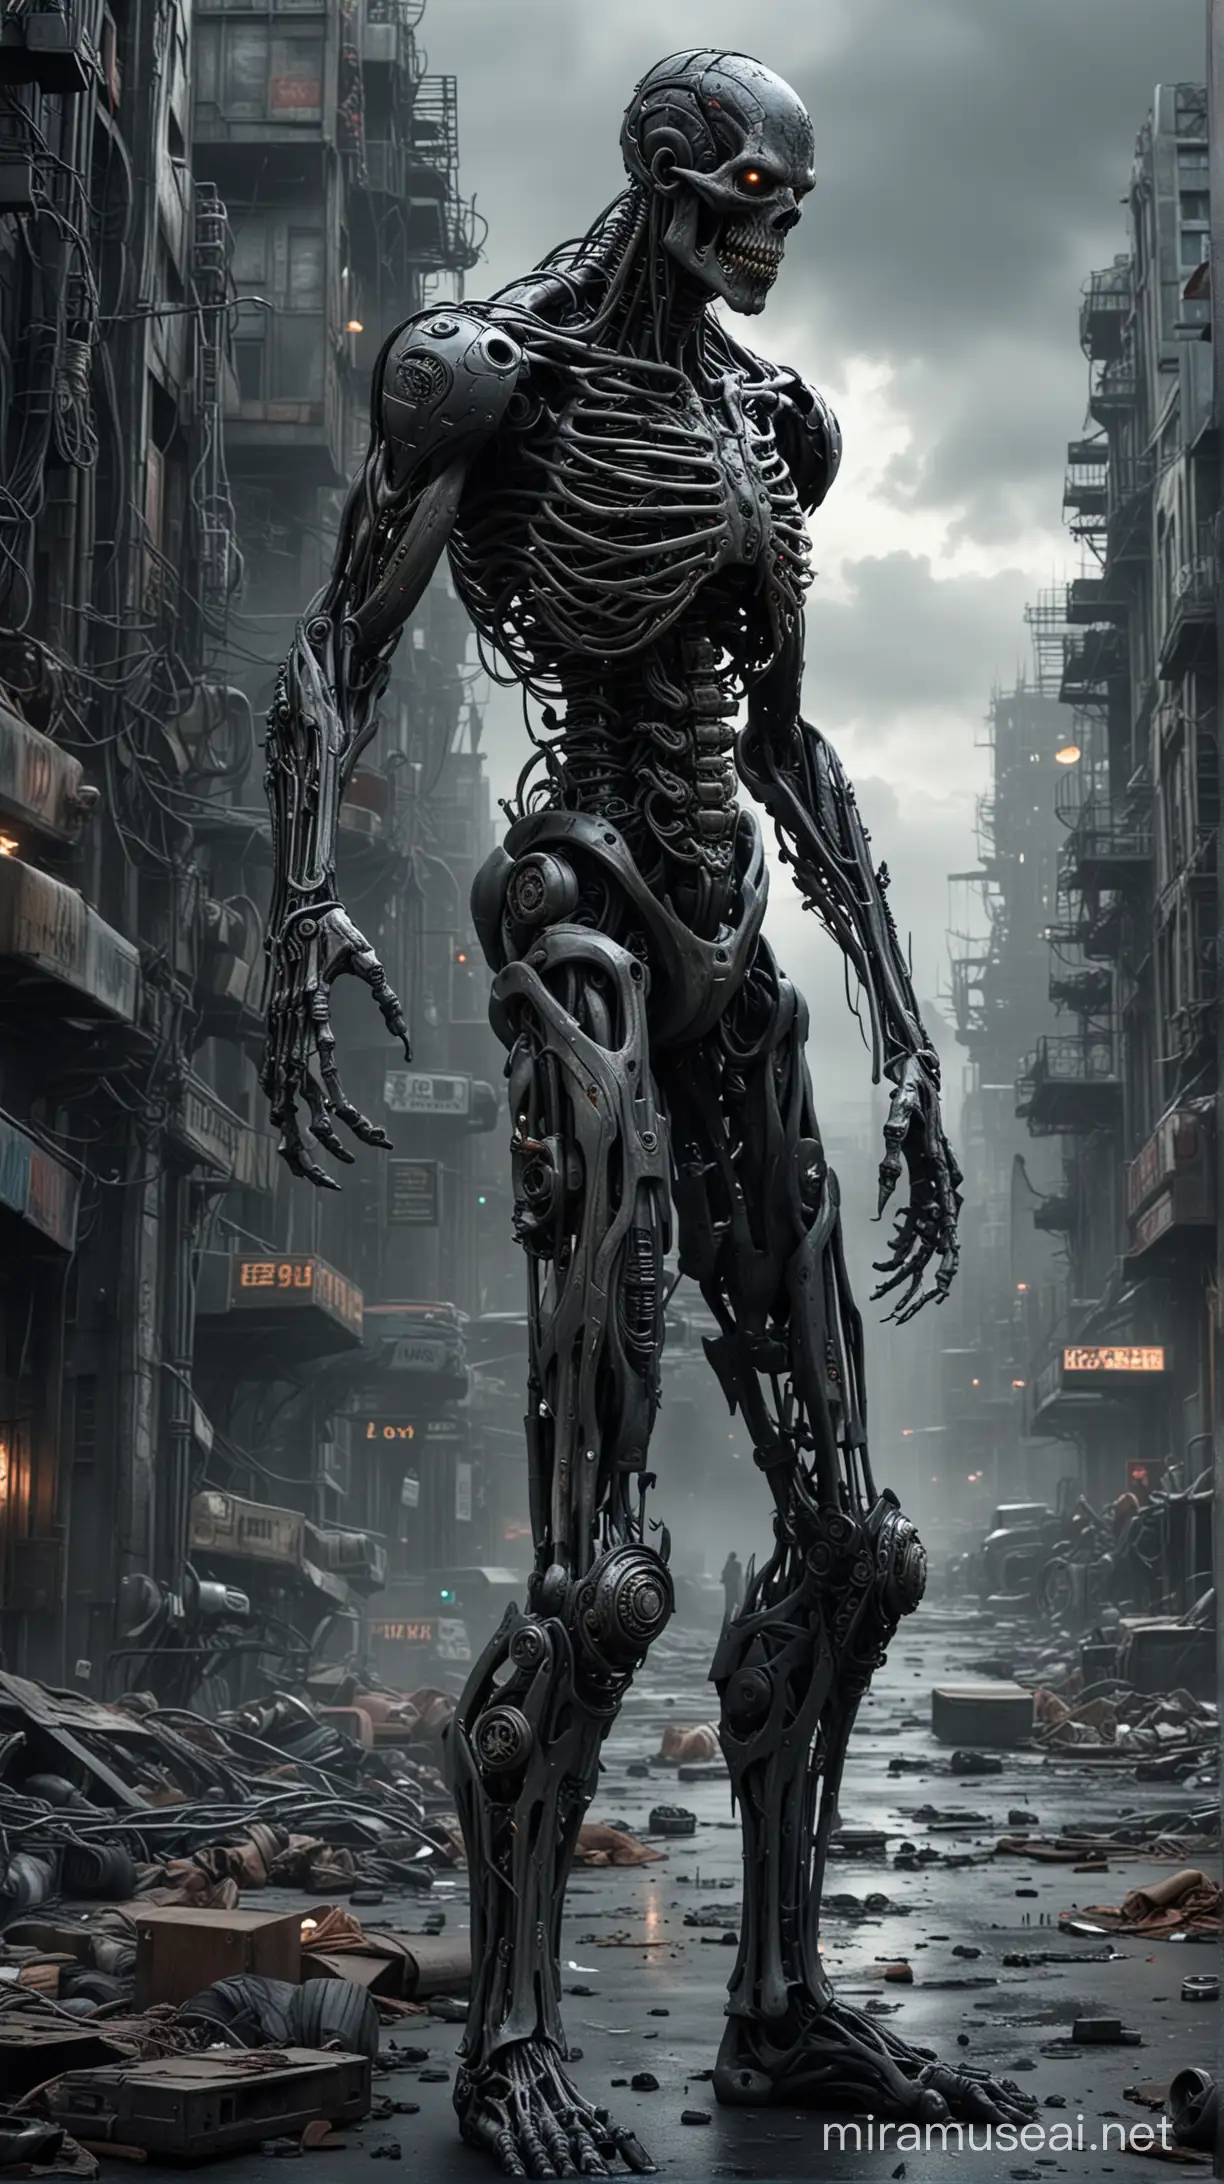 Biomechanical Zombie in Dark Apocalyptic Cityscape